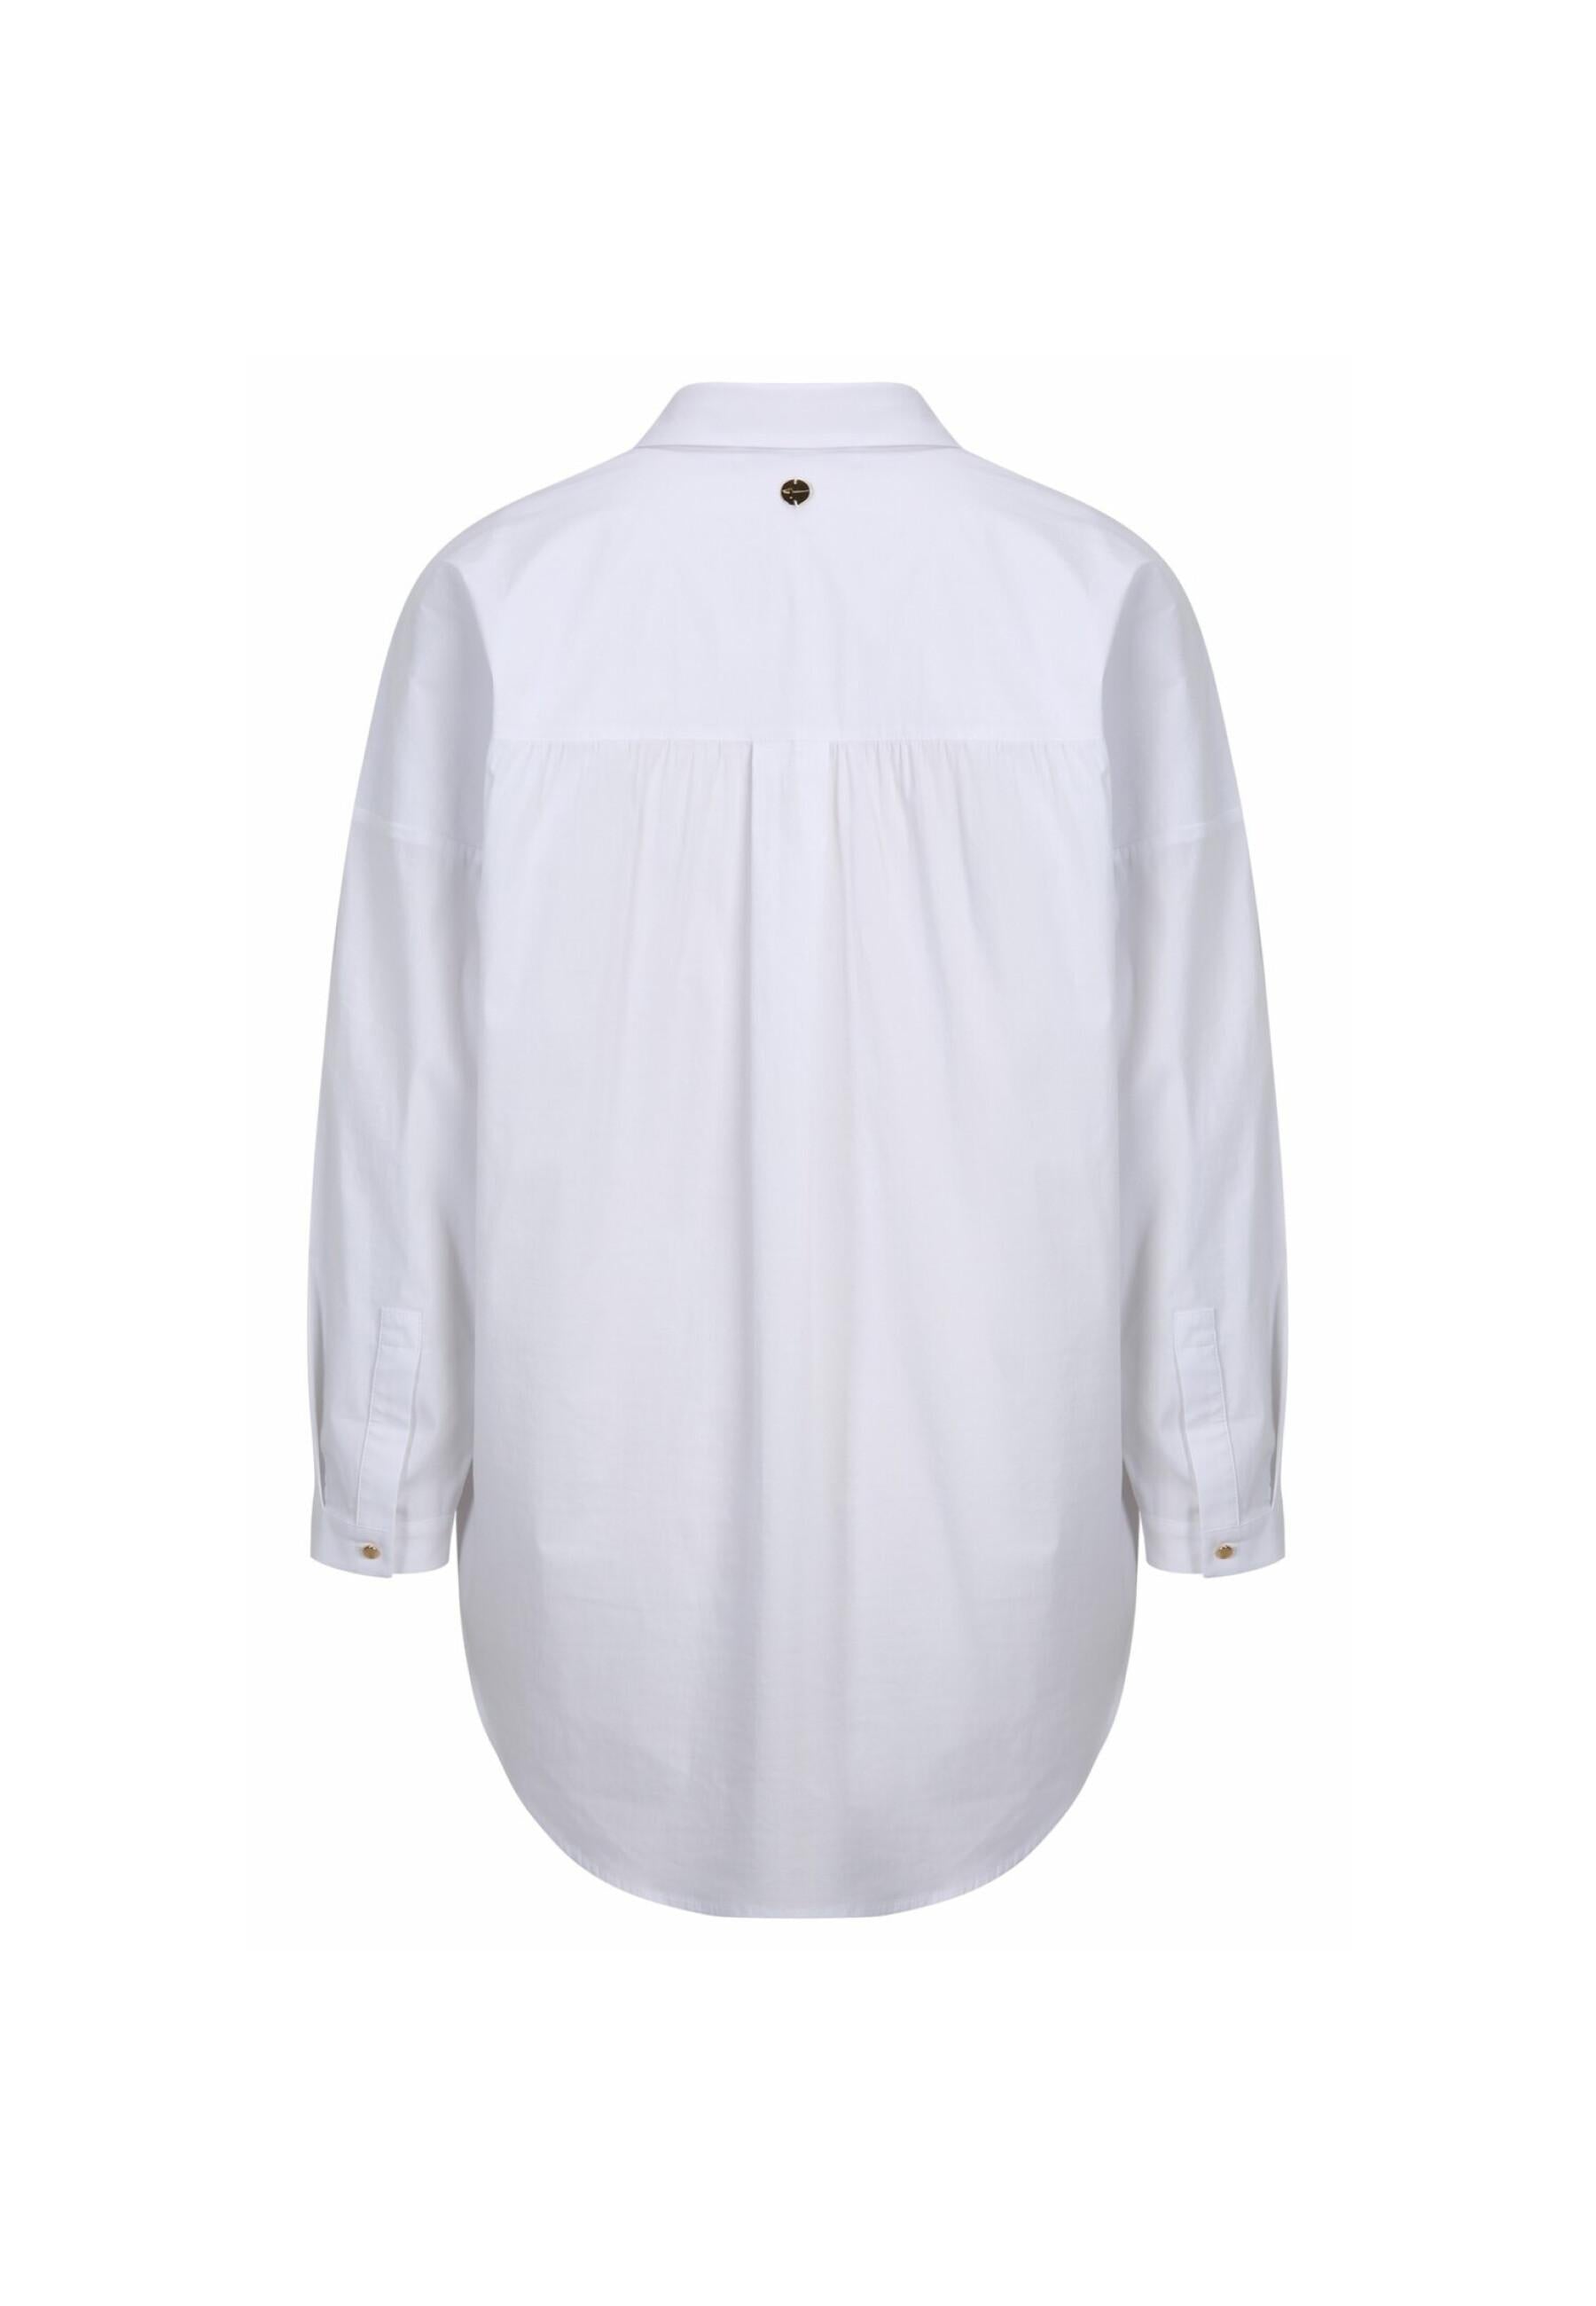 Arhavi Half Placket Shirt in Bright White Hemden Tamaris   